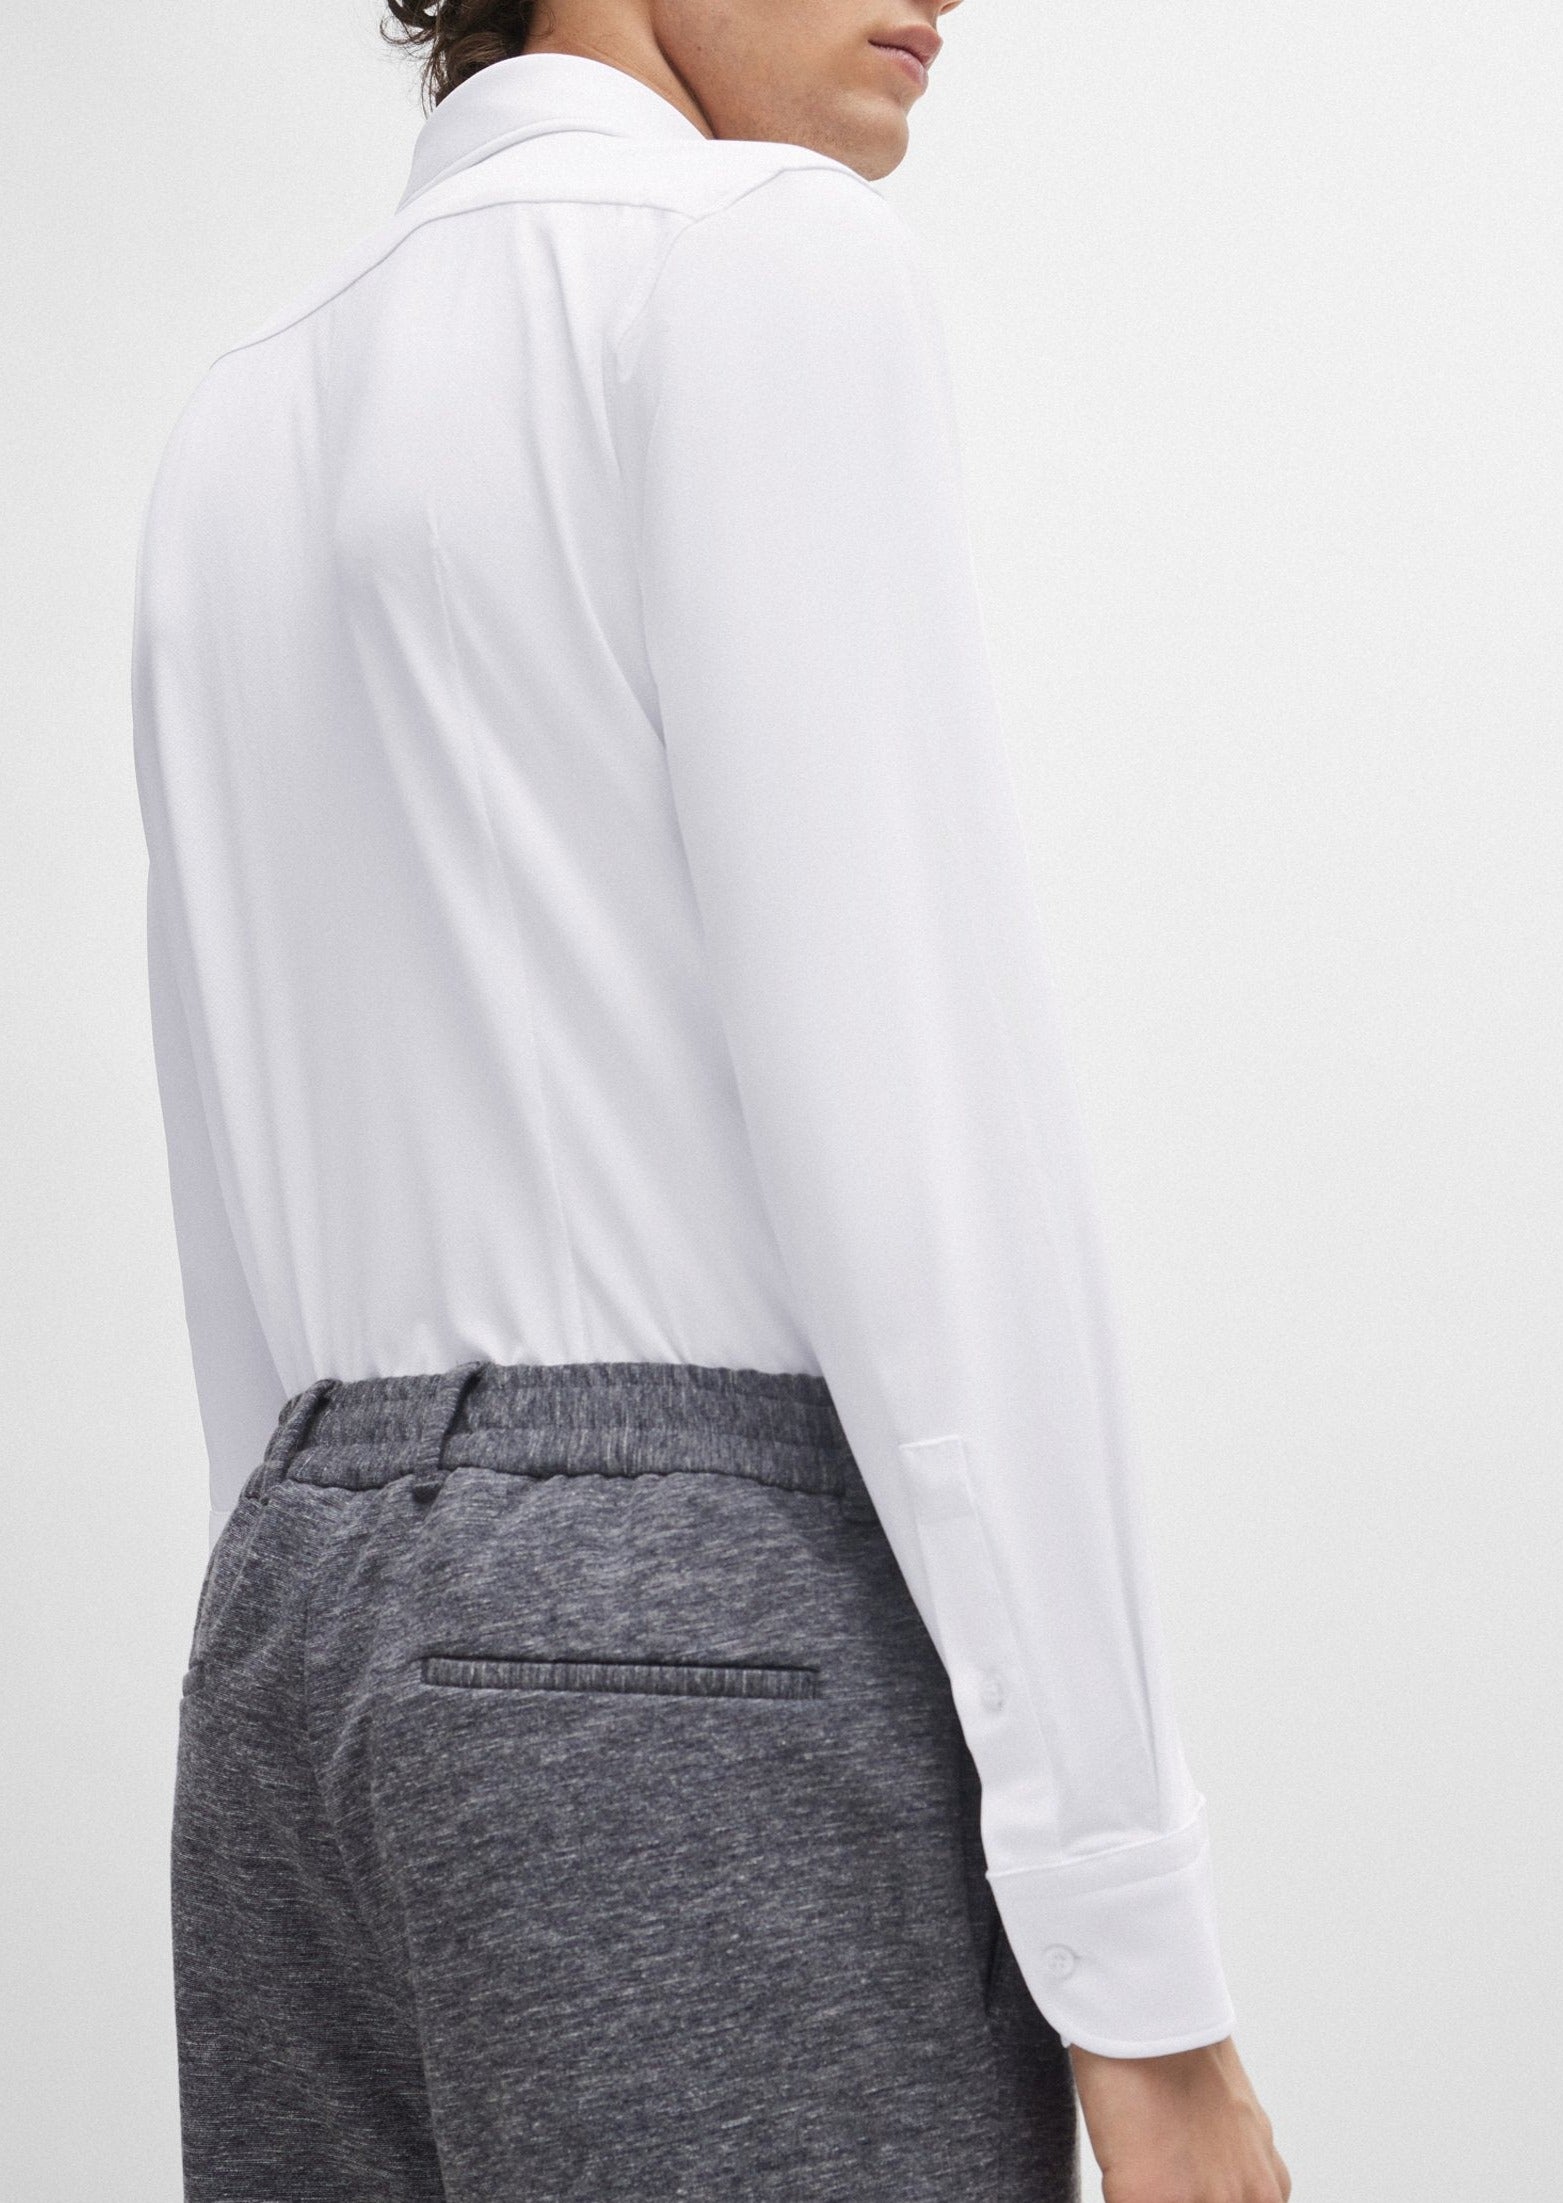 Chemise homme BOSS ajustée blanche stretch | Georgespaul